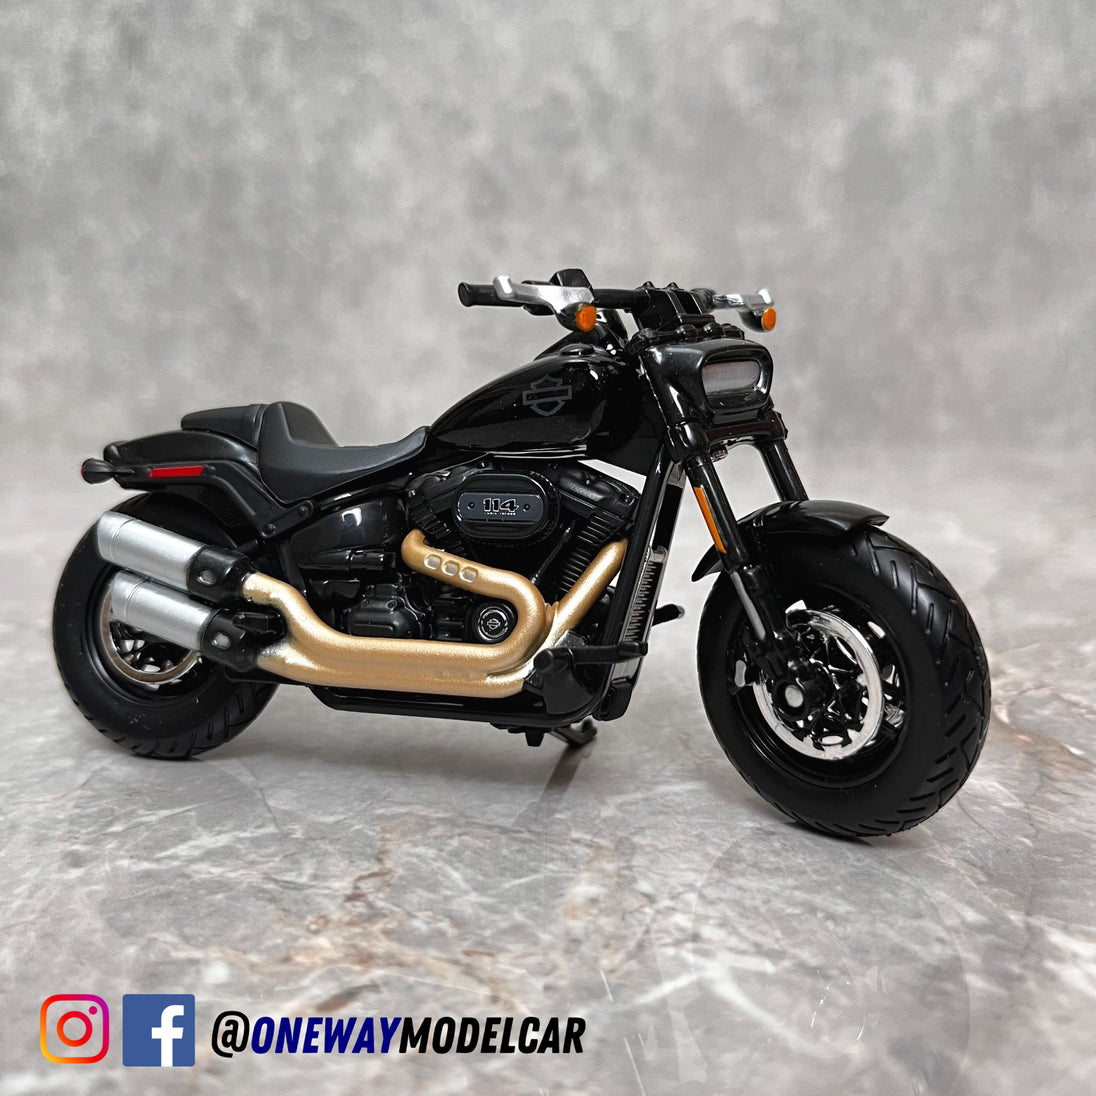 Harley Davidson Fat Bob 114 Black Diecast Bike 1:18 Motorcycle Model By Maisto